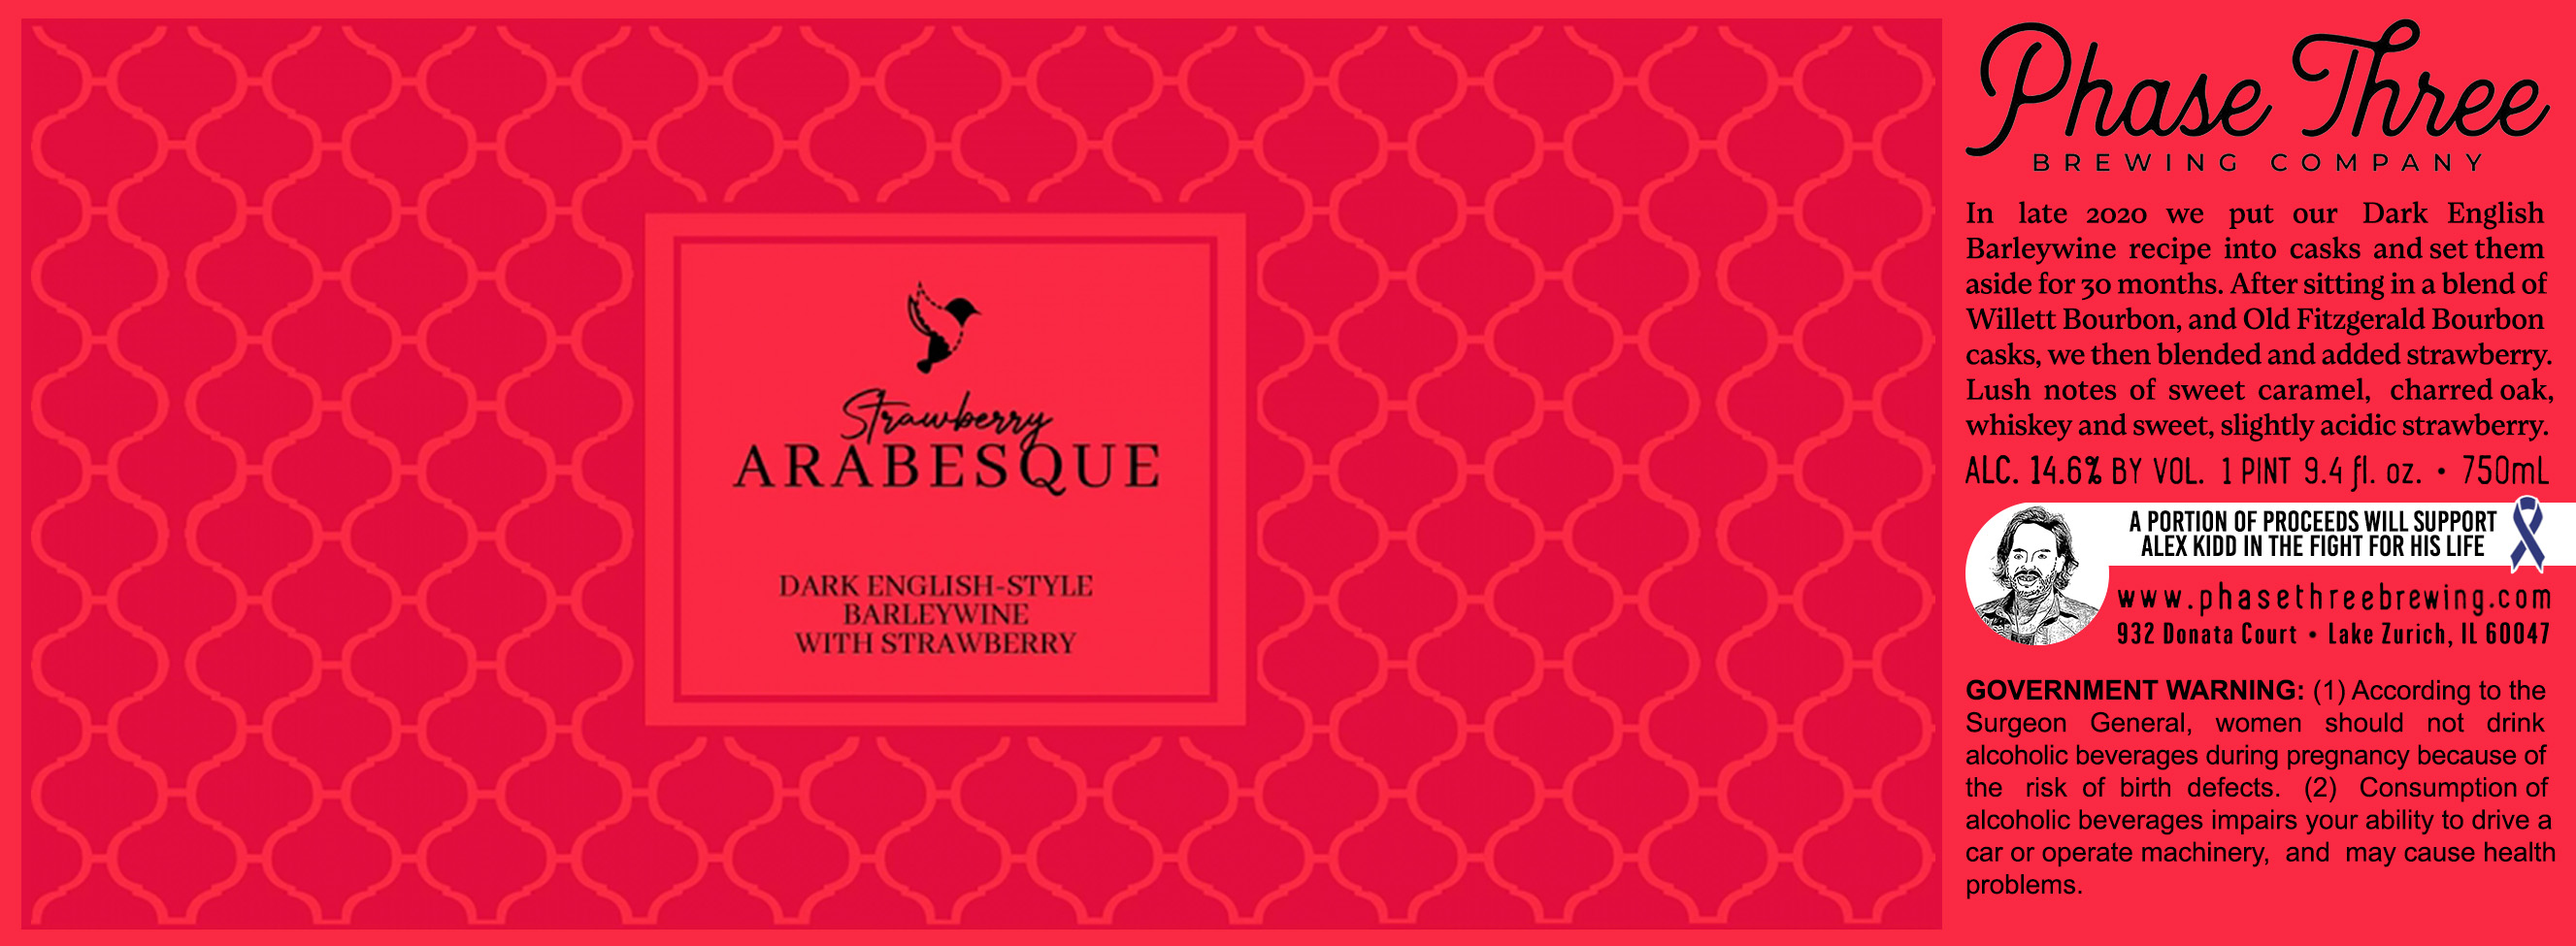 Flat Label art for Phase Three's Strawberry Arabesque